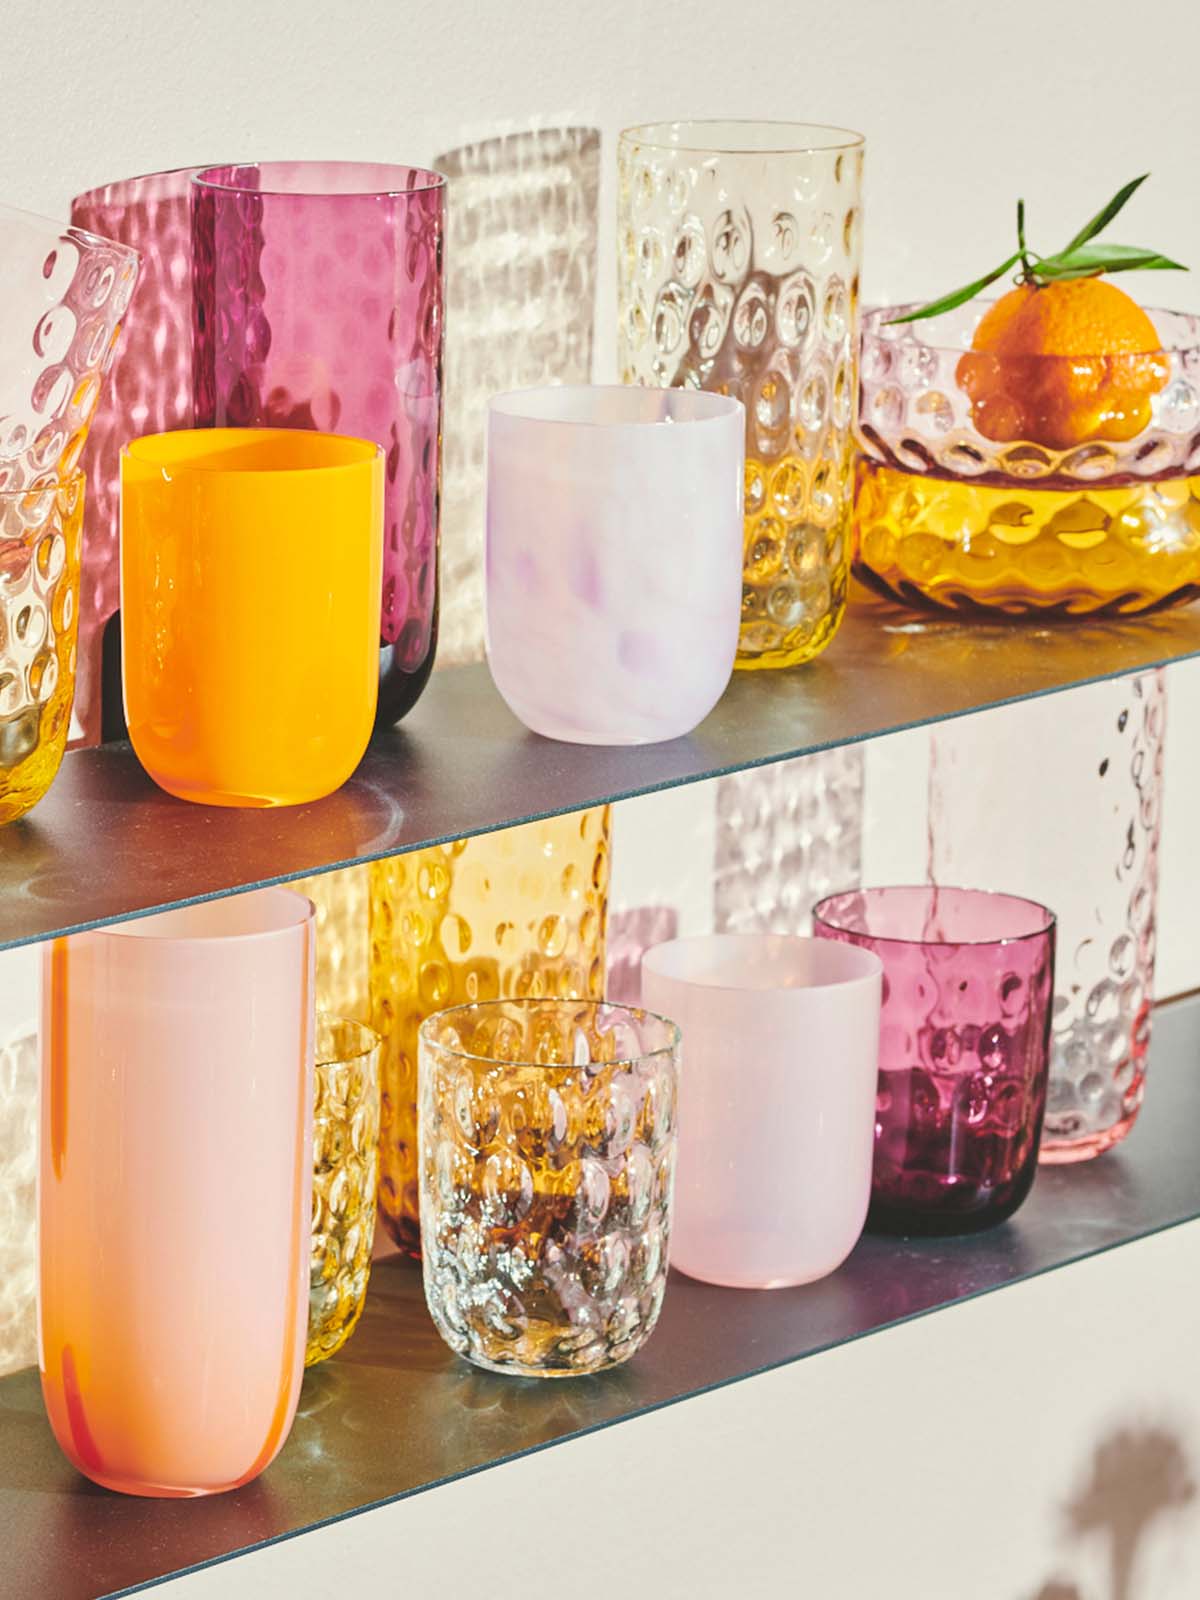 Vandglas i lilla glas H9xD7cm